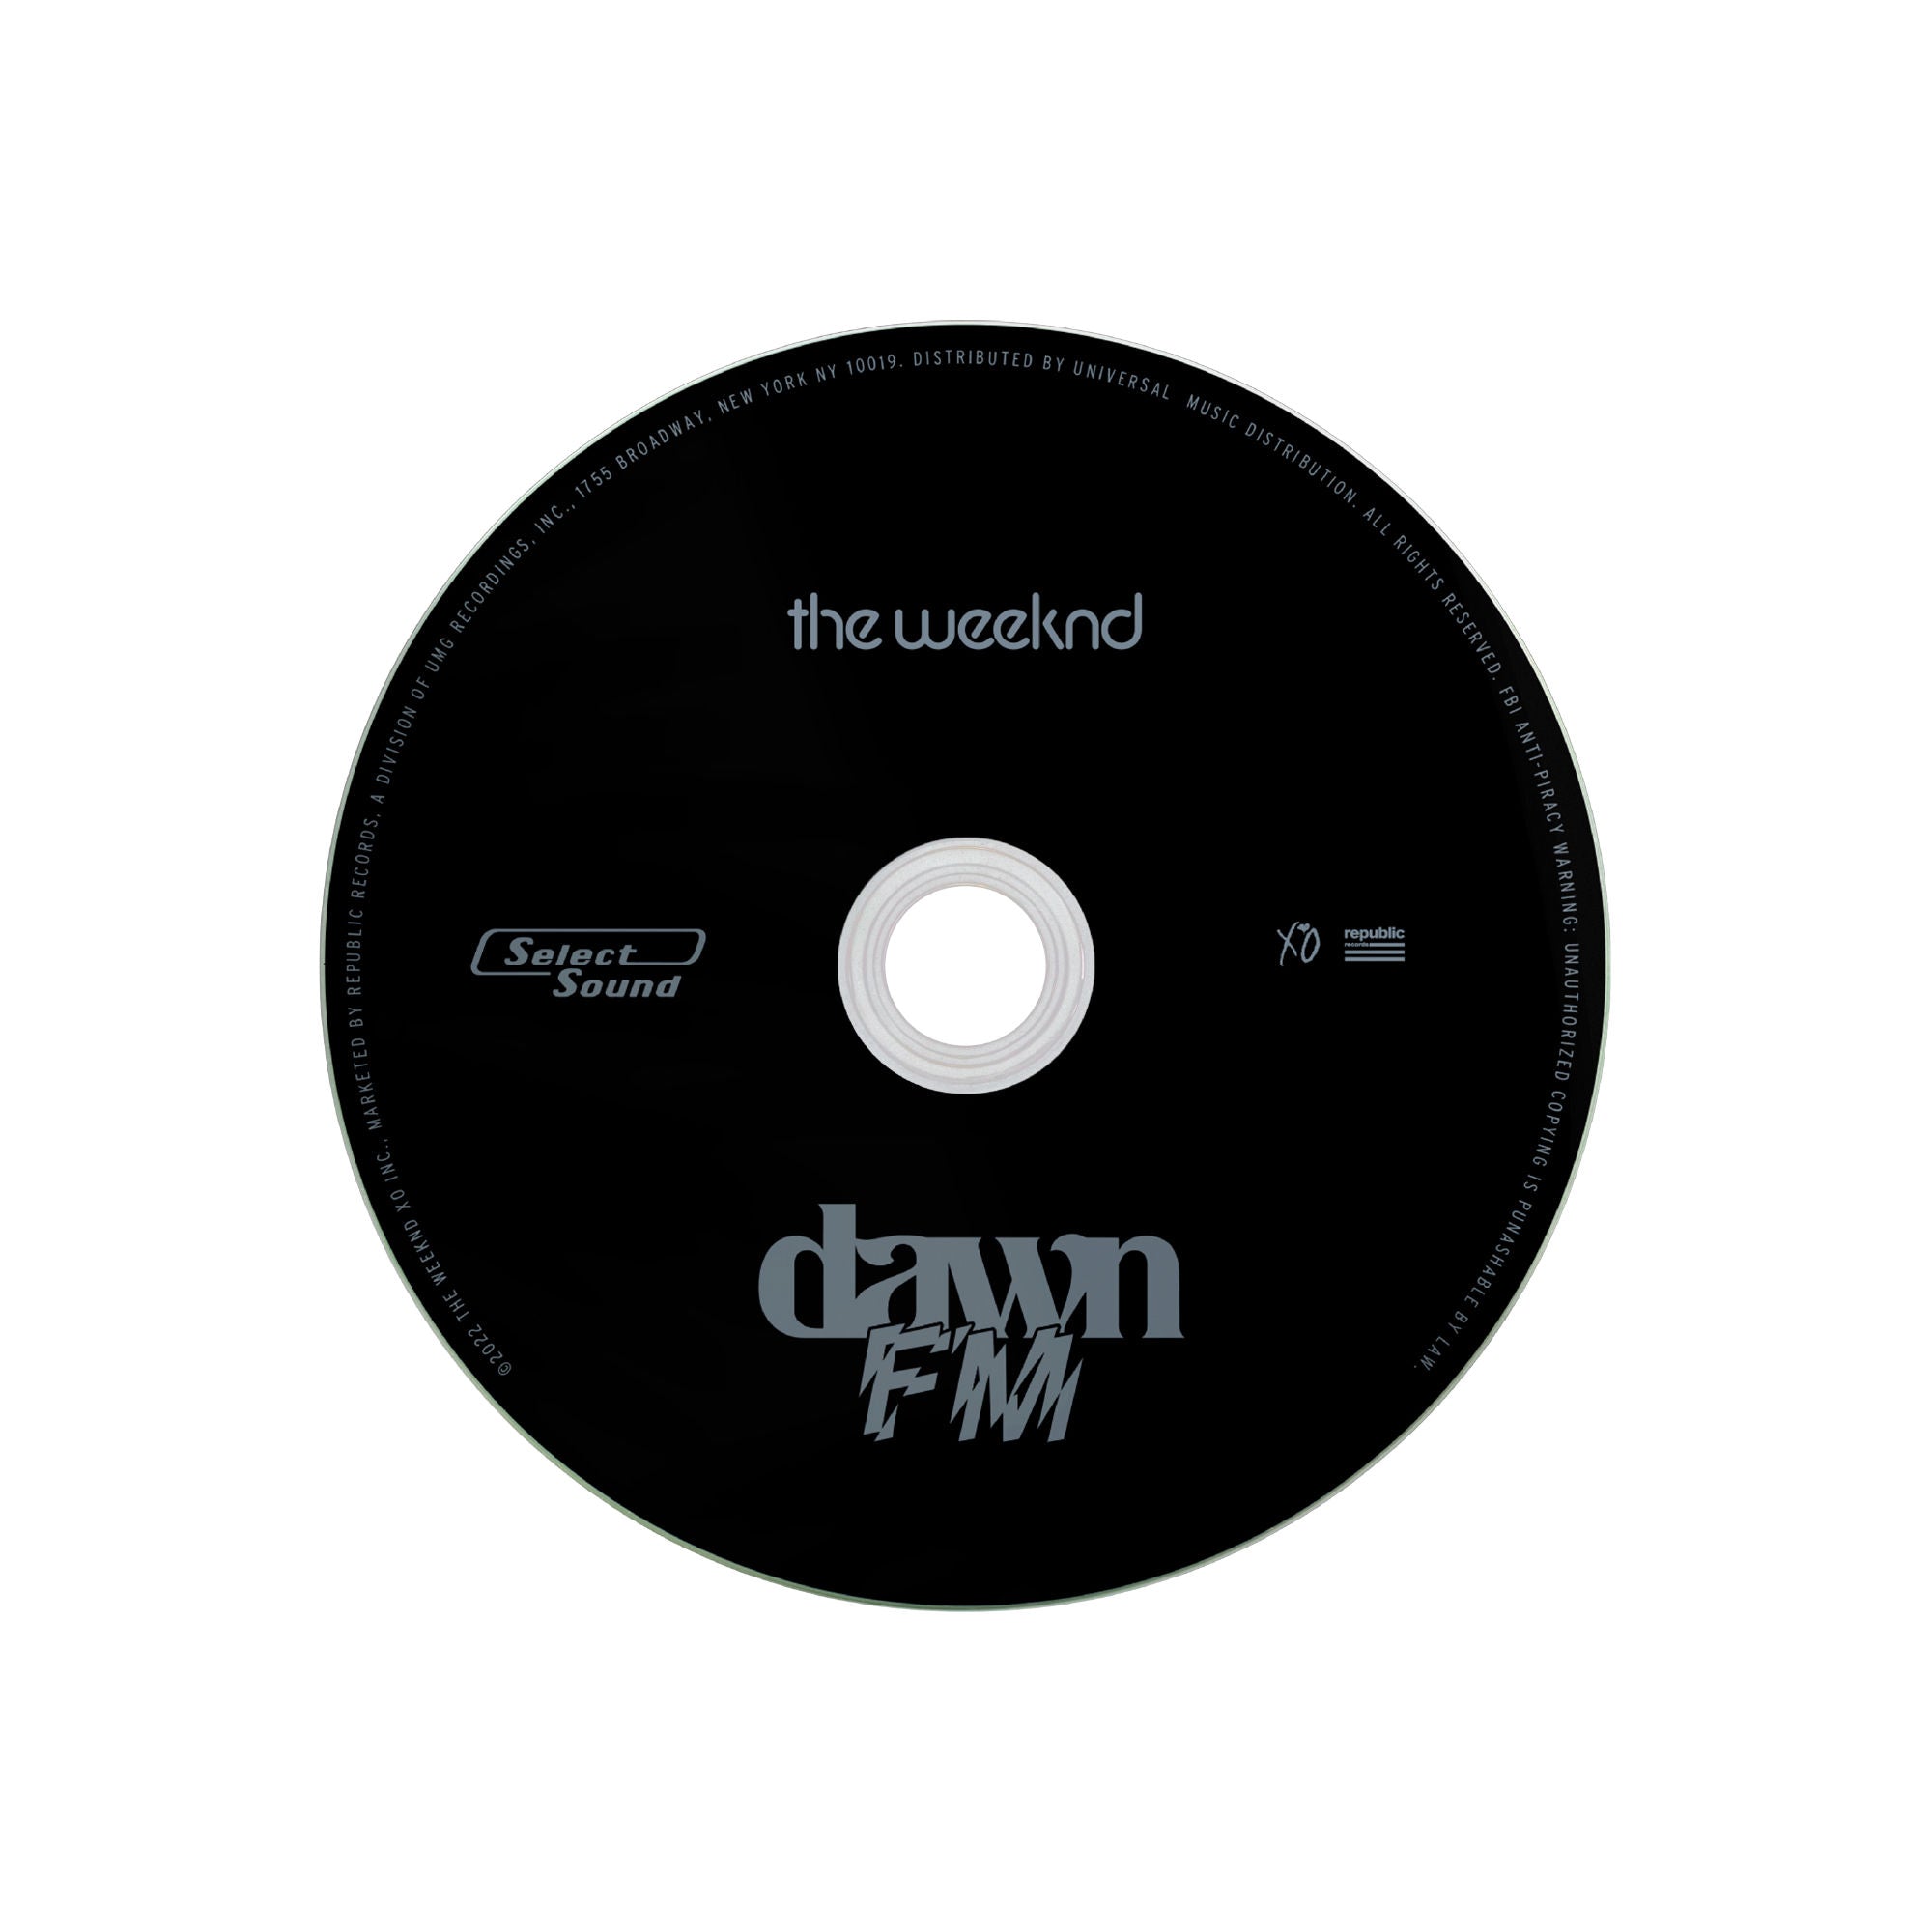 The Weeknd - DAWN FM: CD (Clean)